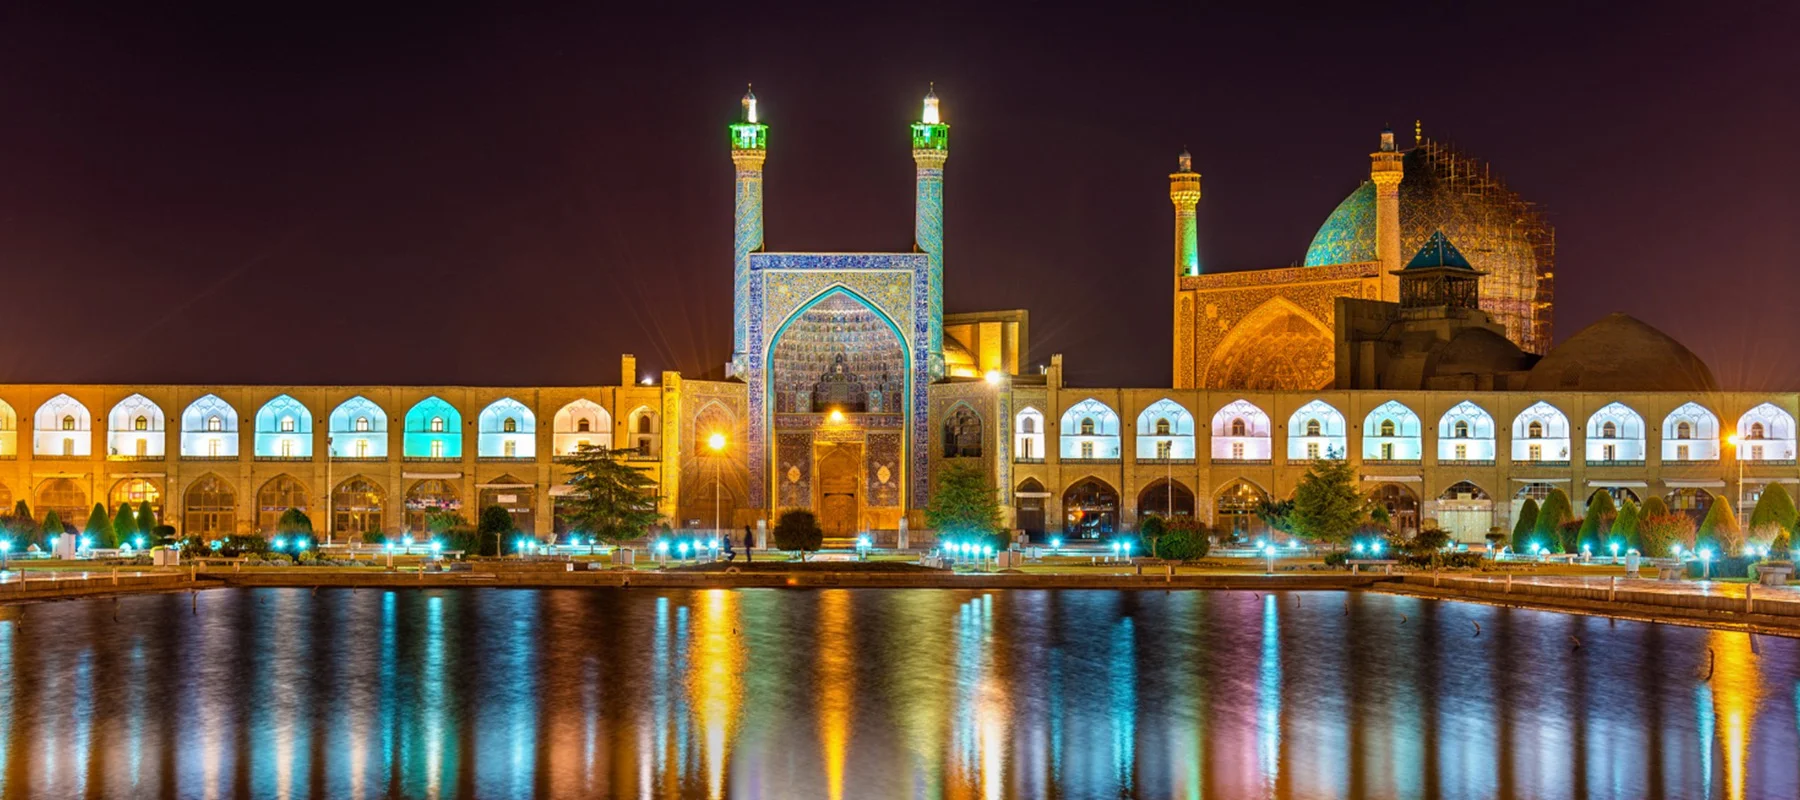 Isfahan Imam Mosque: A Jewel of Historical Splendor